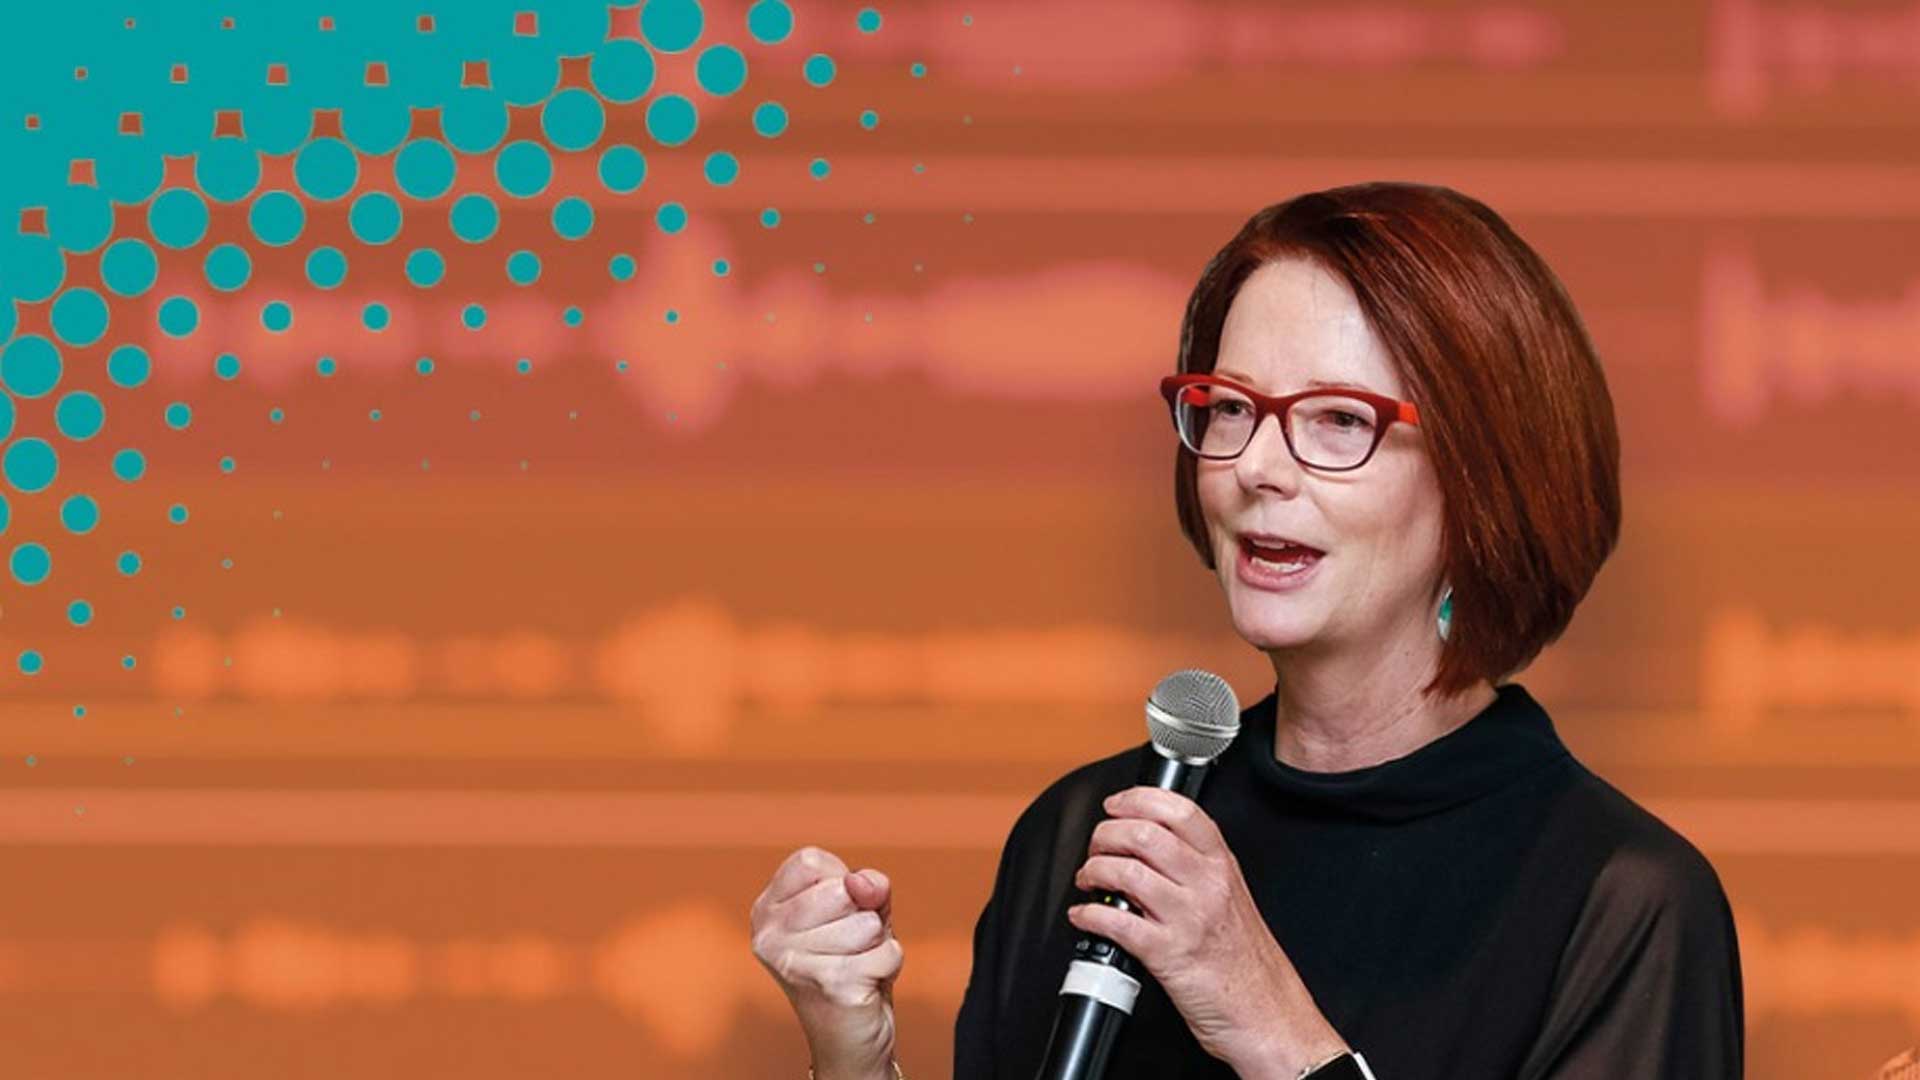 Julia Gillard speaking into a microphone against an orange backdrop